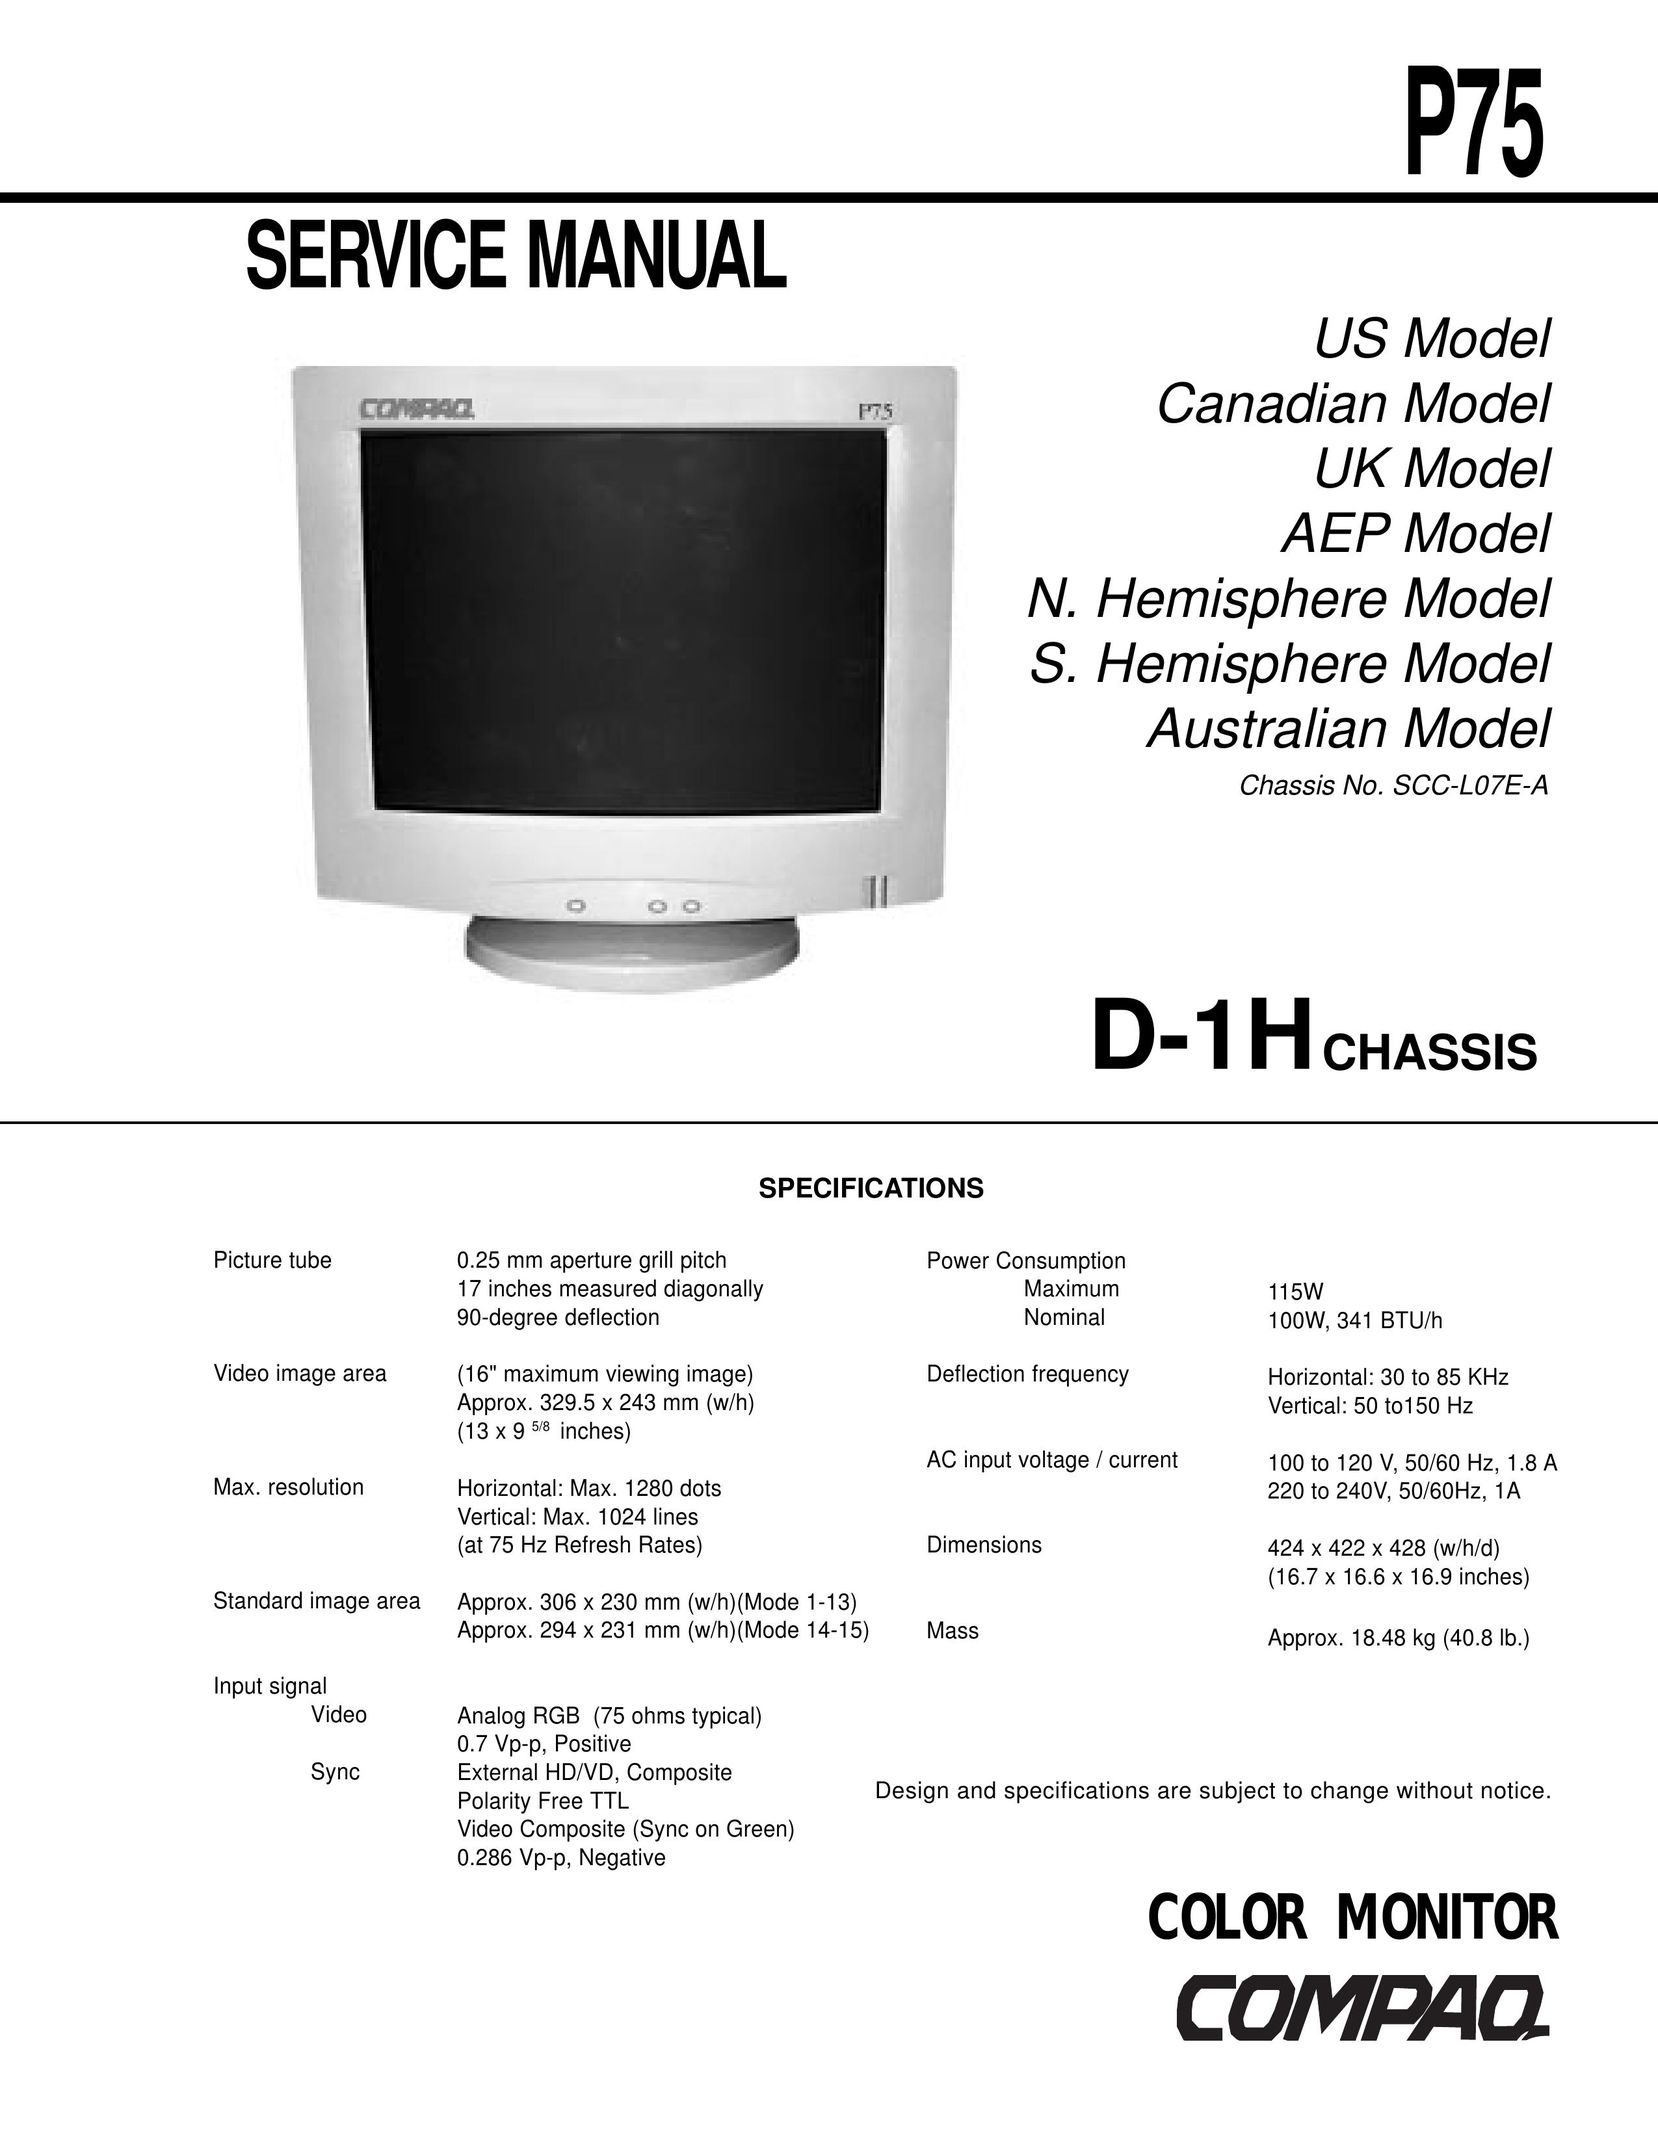 Compaq D-1H Computer Monitor User Manual